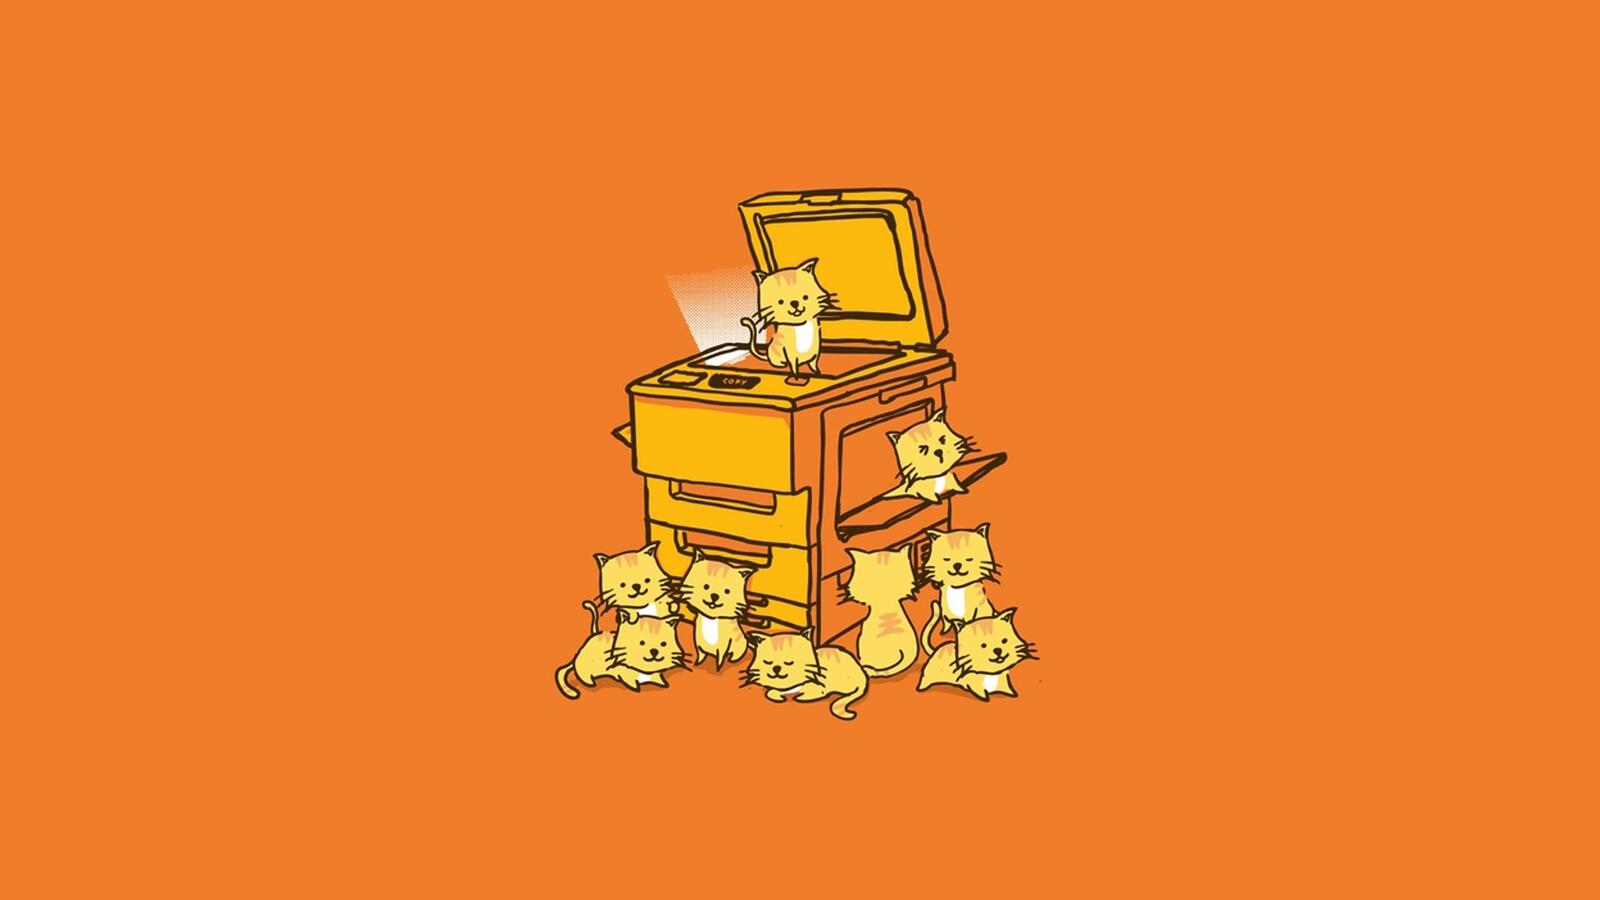 Free photo Cute drawn kittens on an orange background